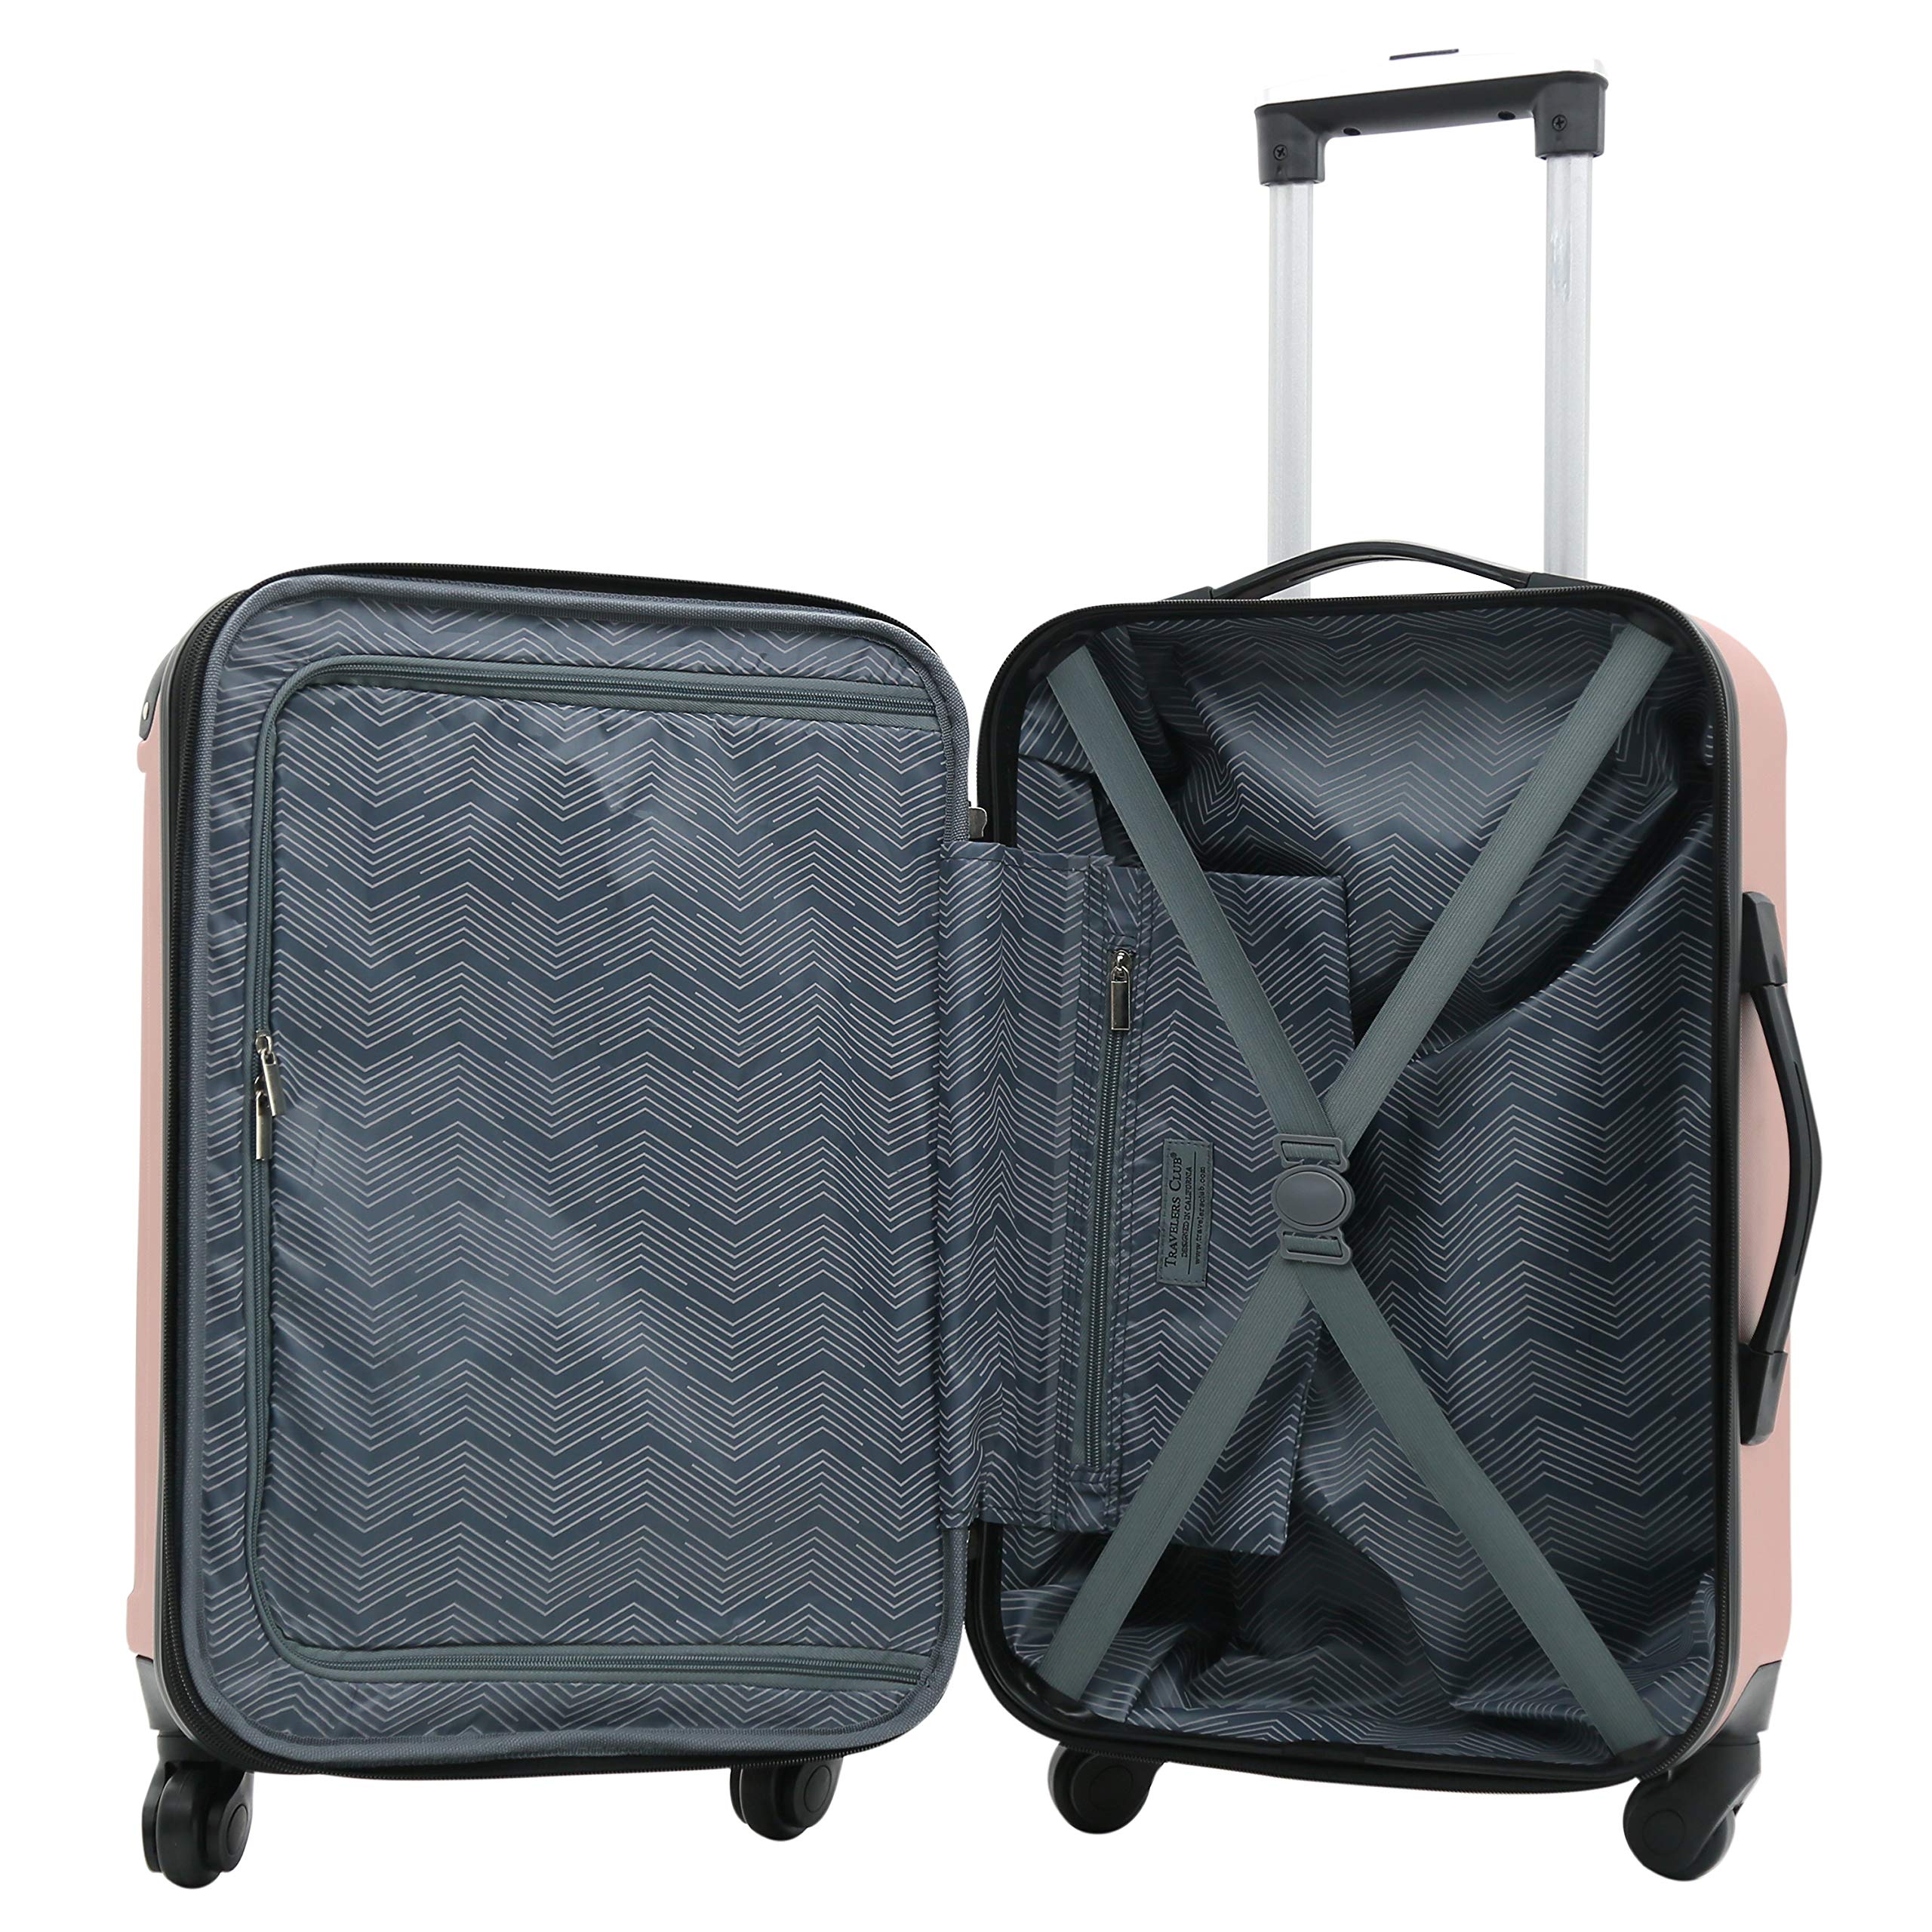 Travelers Club Expandable Midtown Hardside 4-Piece Luggage Travel Set, Rose Gold